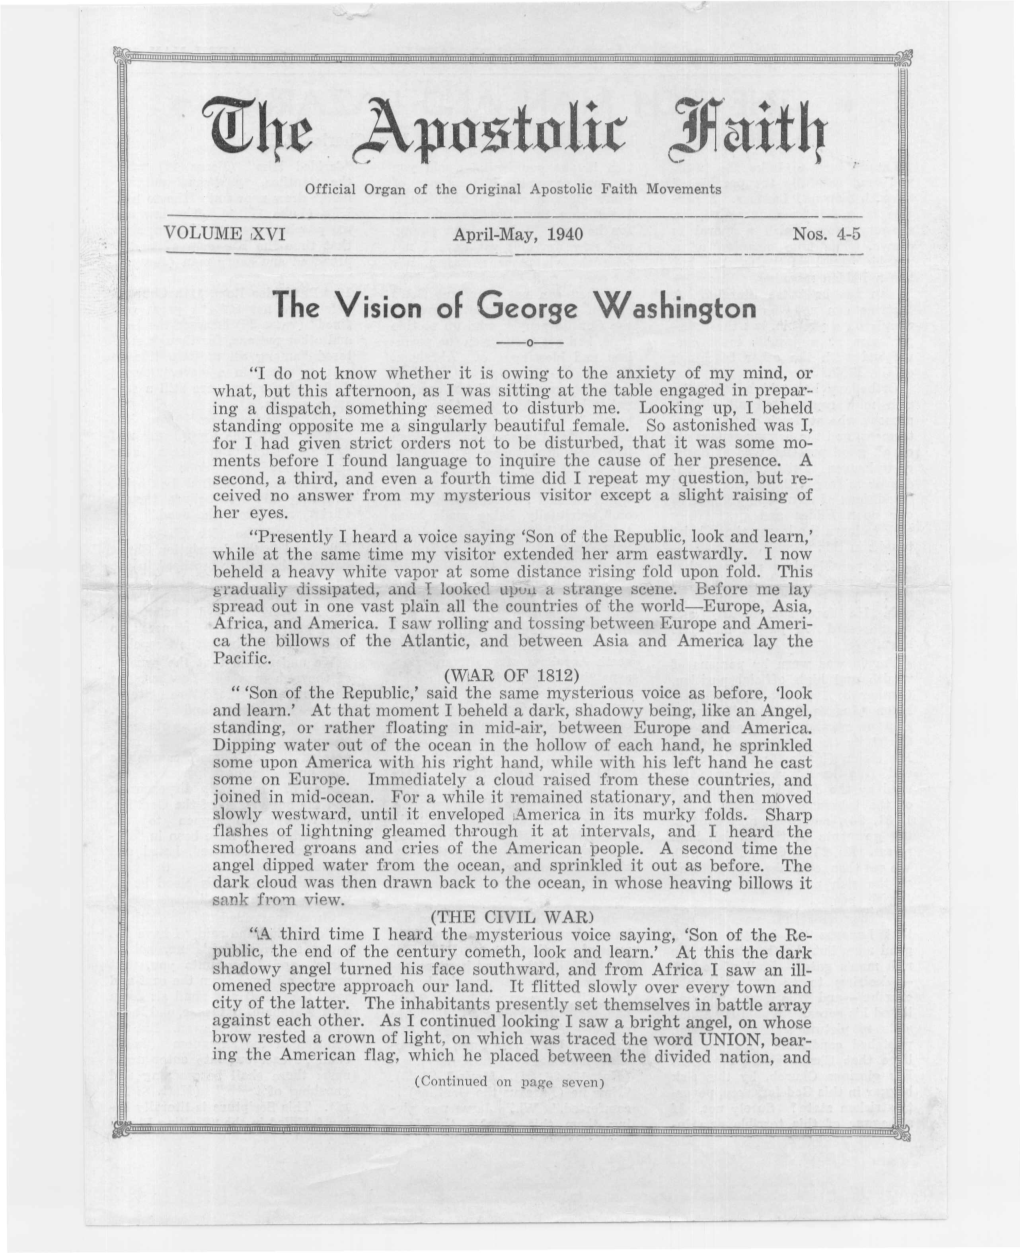 The Vision of George Washington